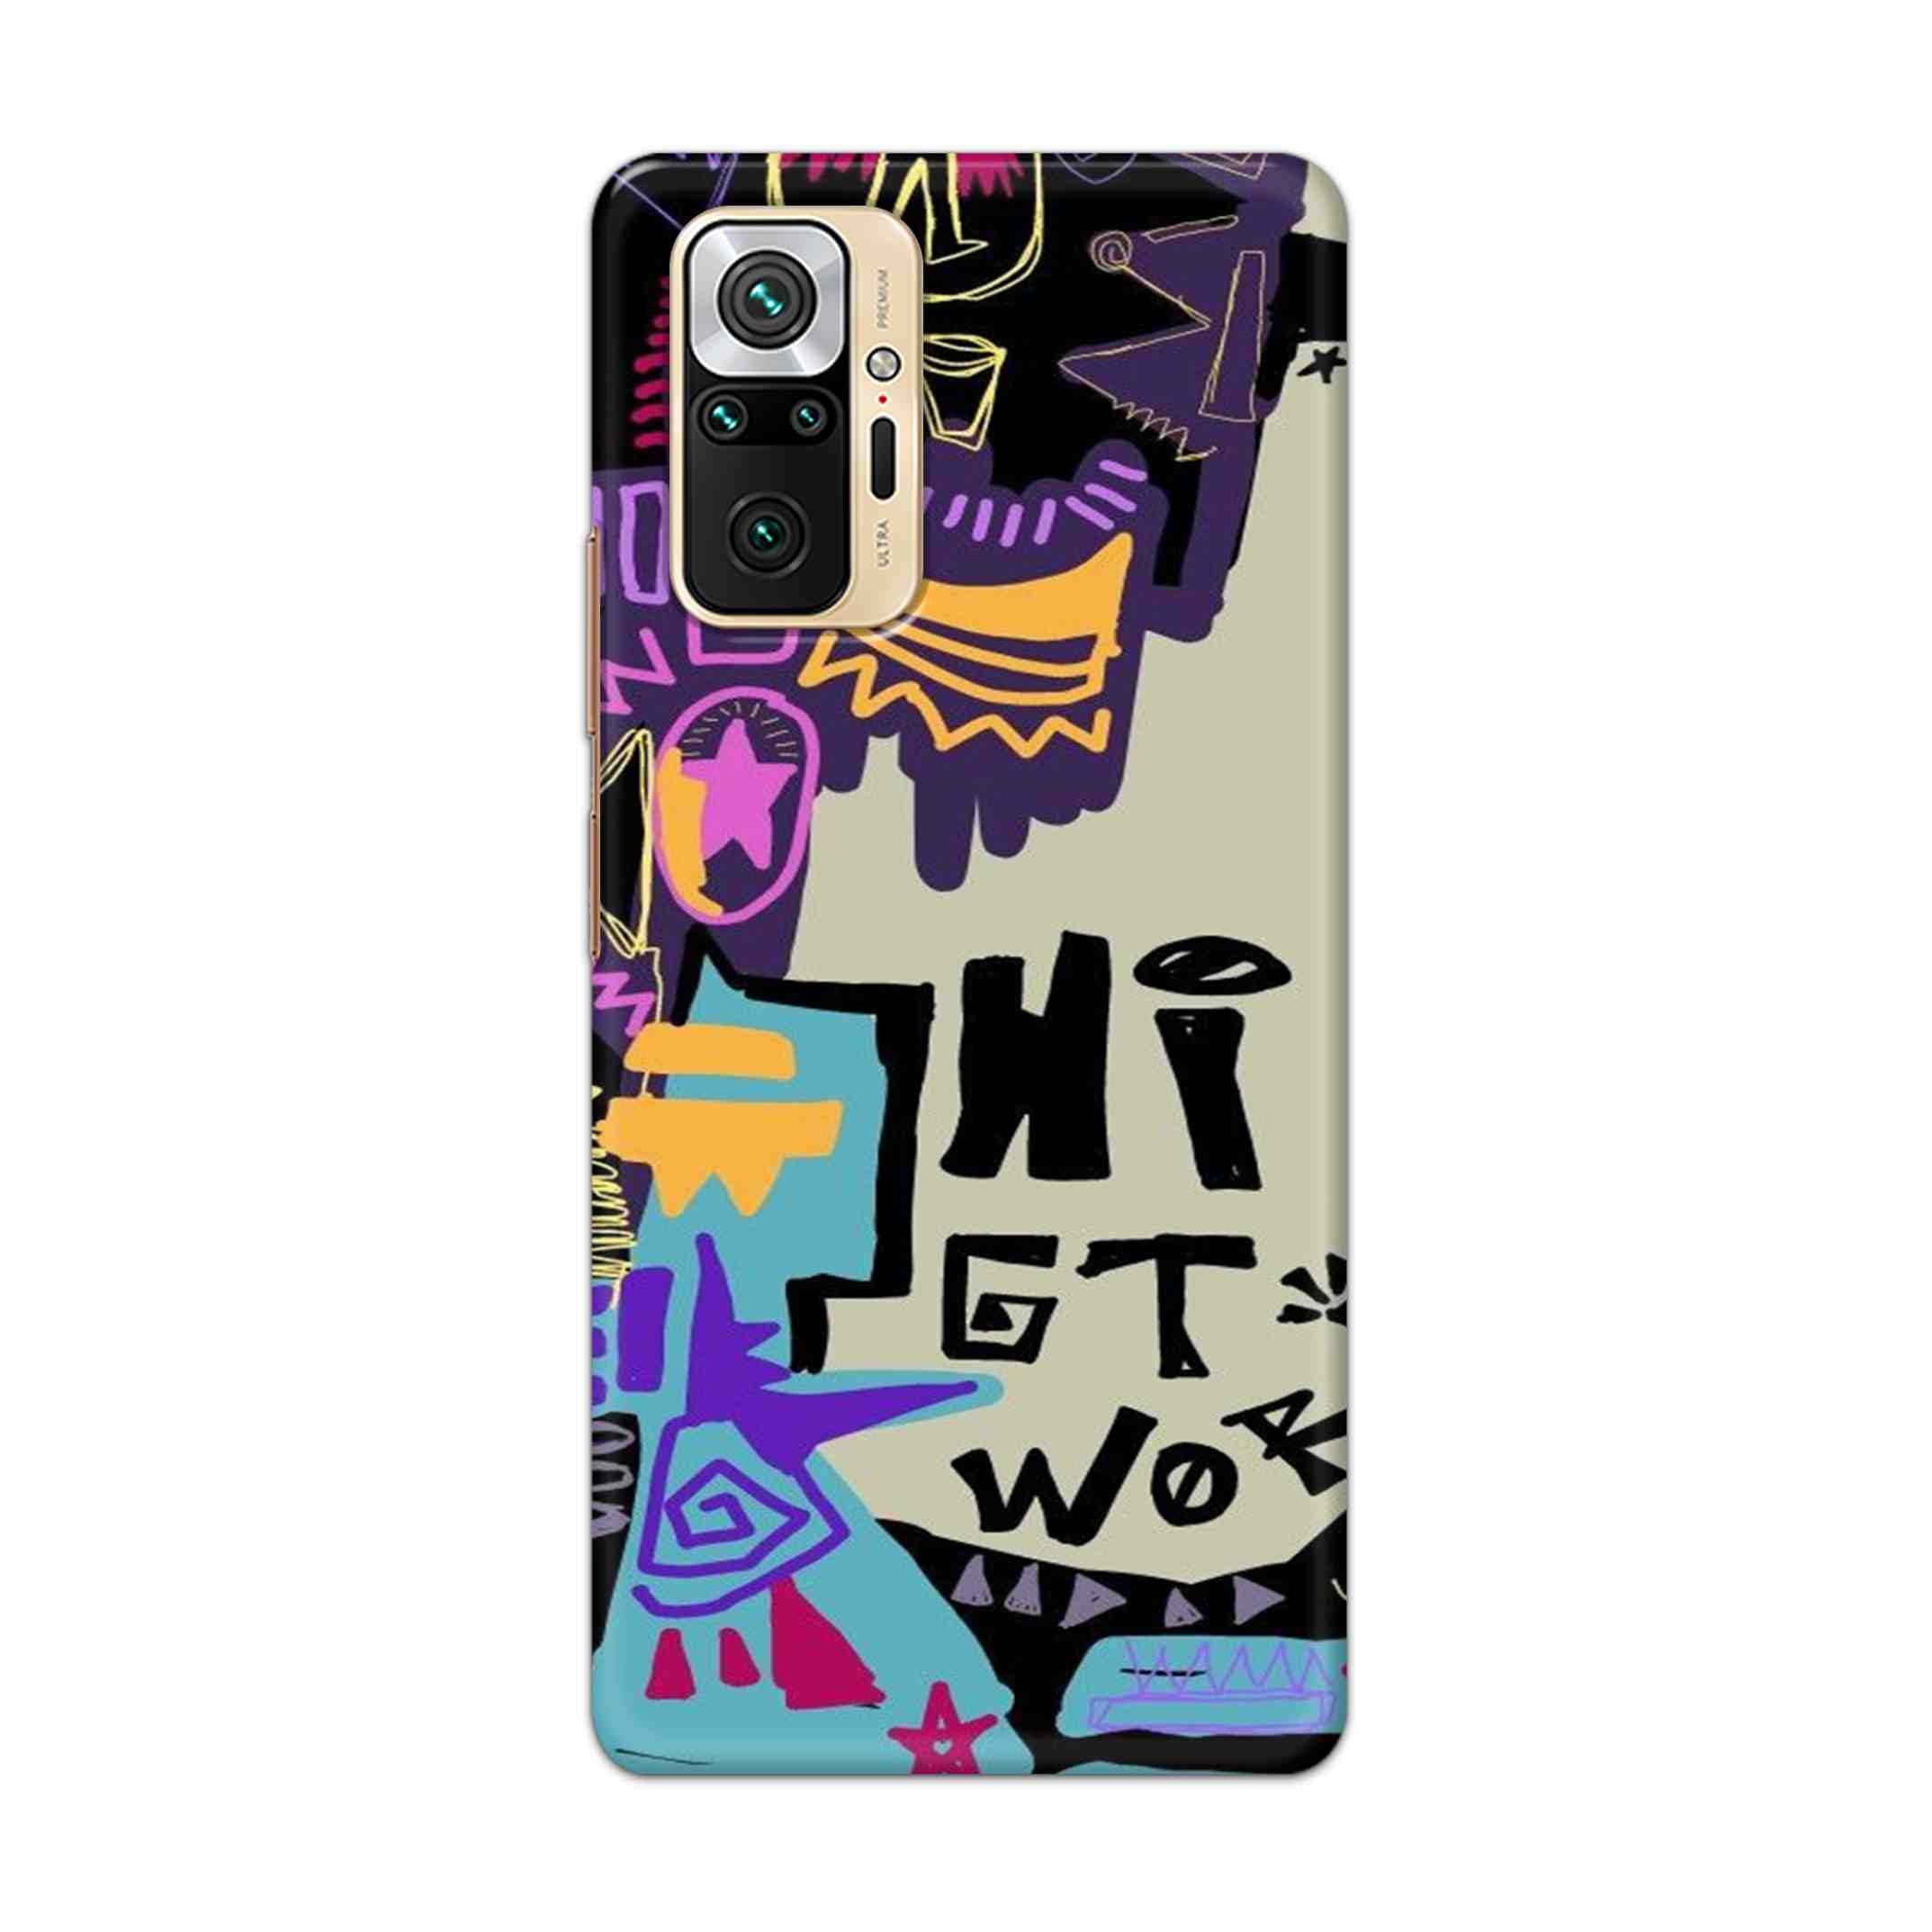 Buy Hi Gt World Hard Back Mobile Phone Case Cover For Redmi Note 10 Pro Online